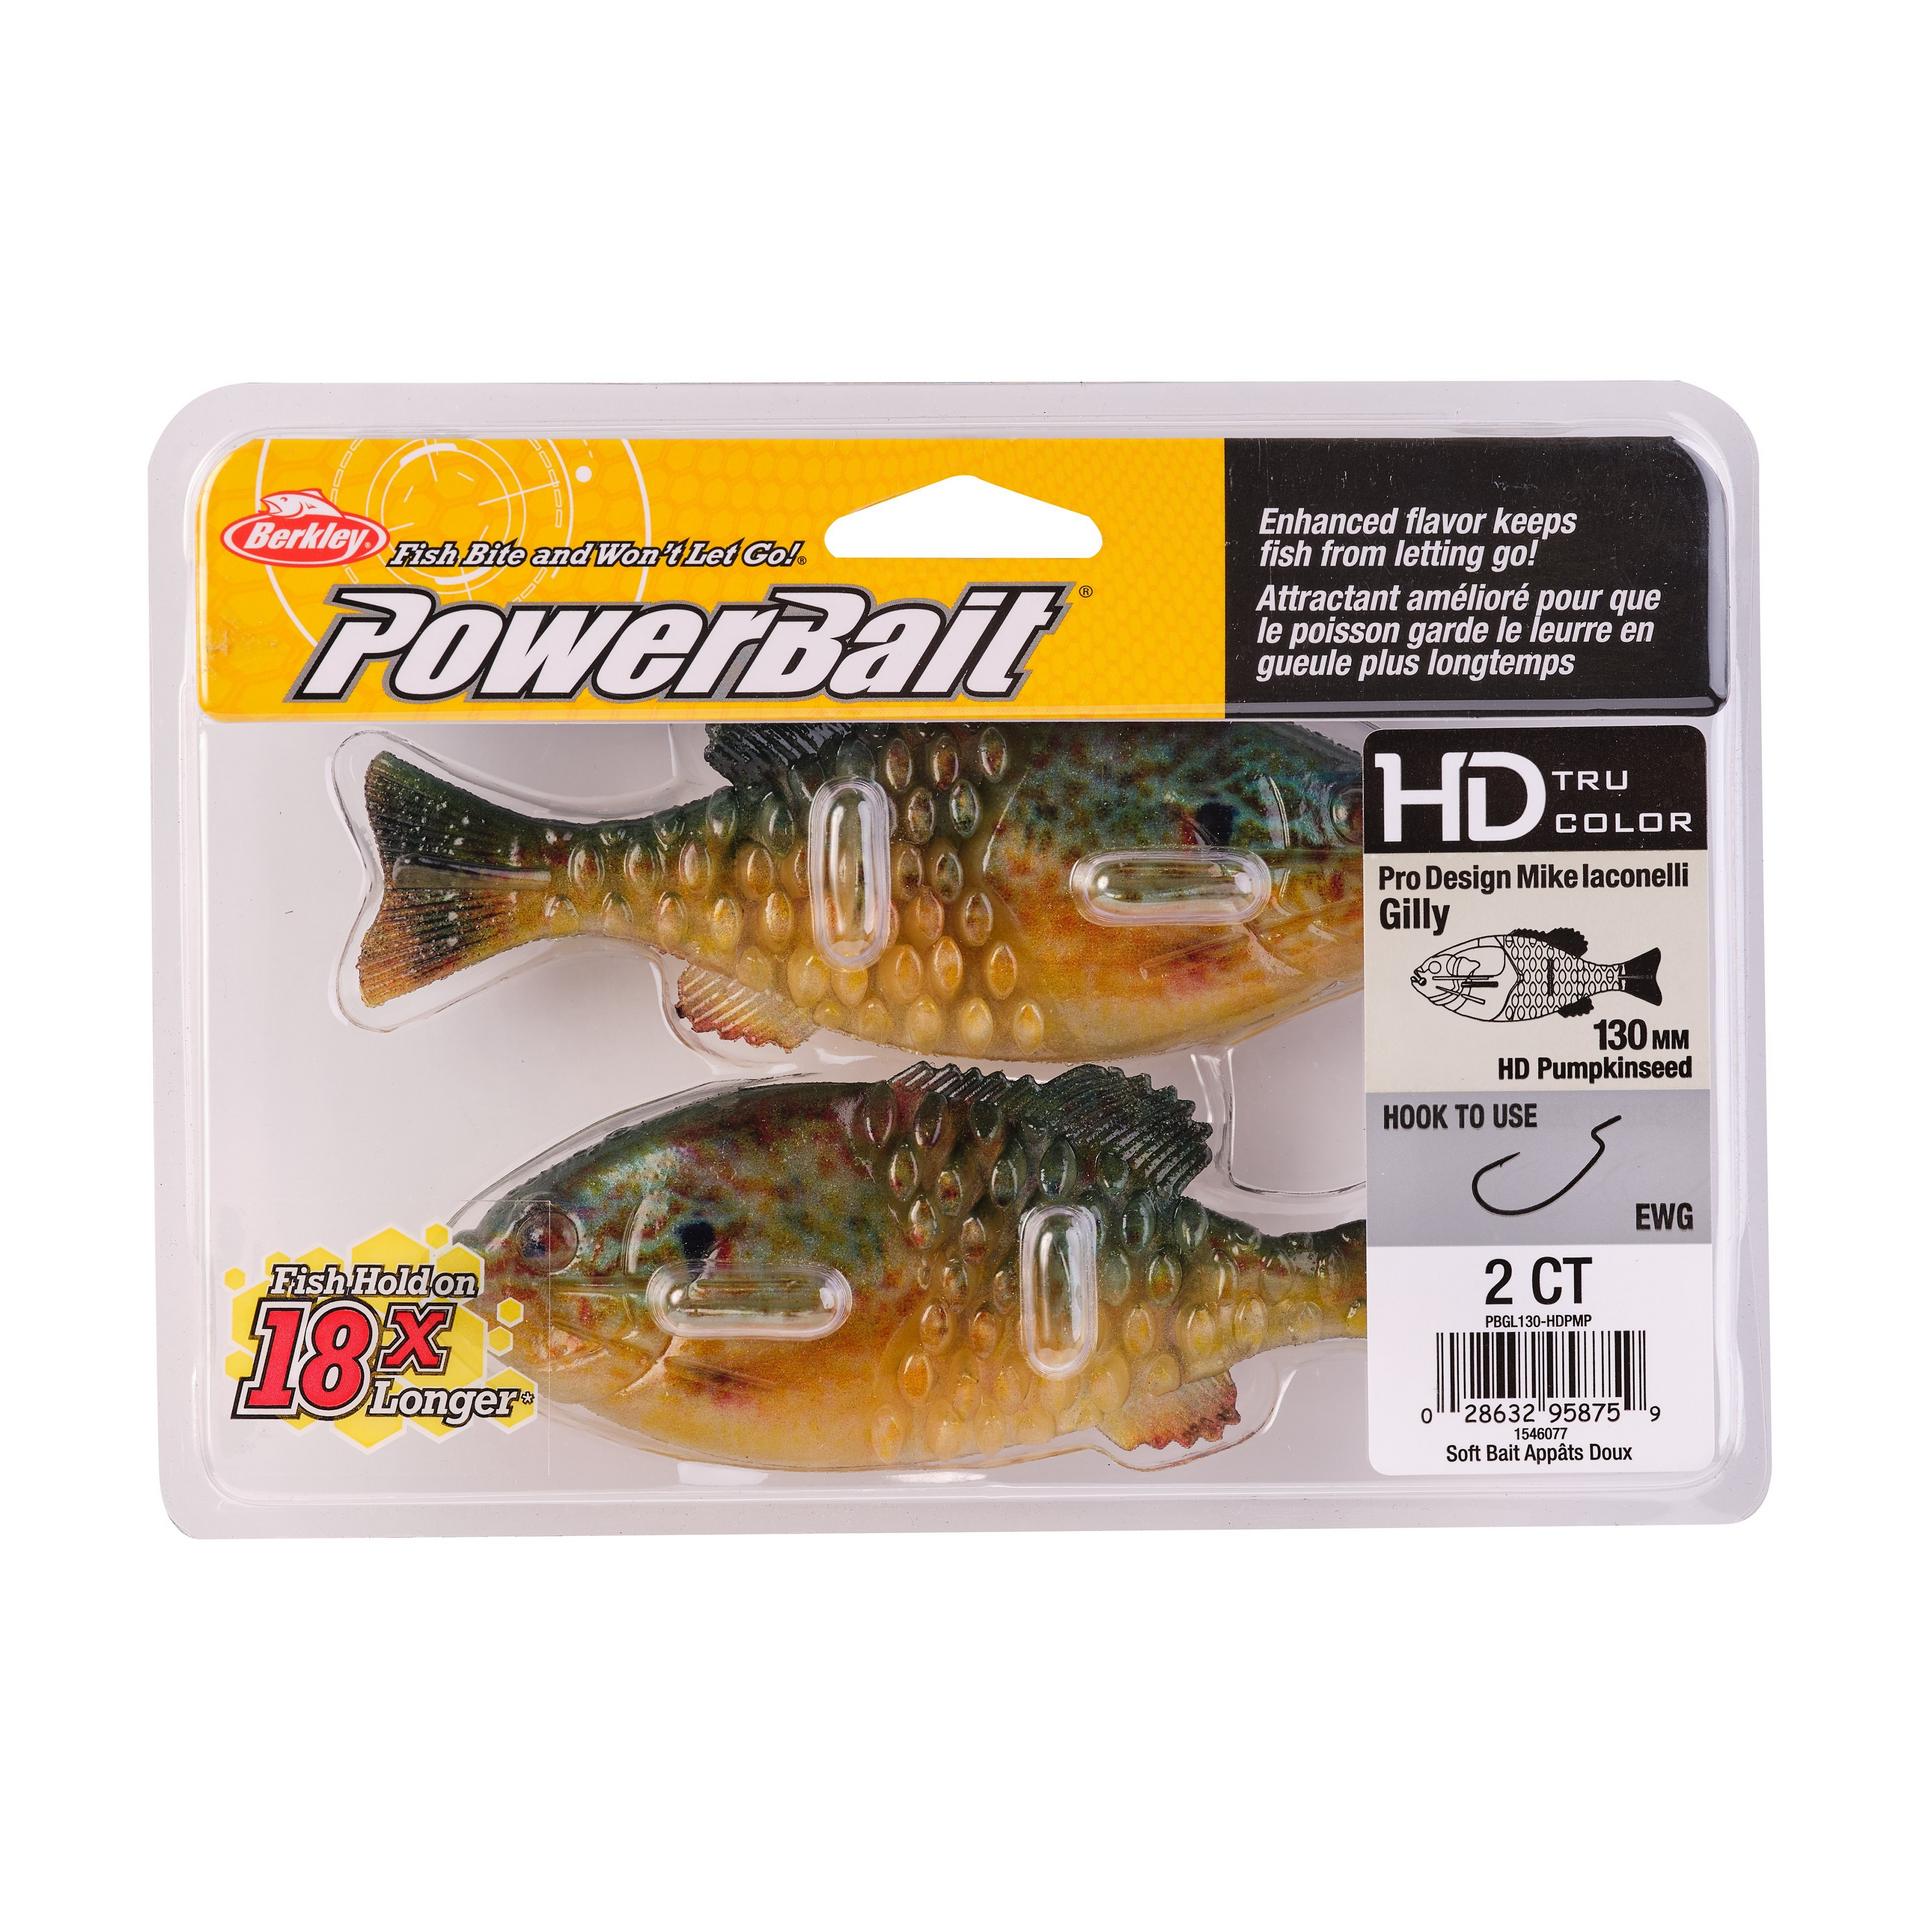 PowerBaitGilly HDPumpkinseed 130mm PKG | Berkley Fishing